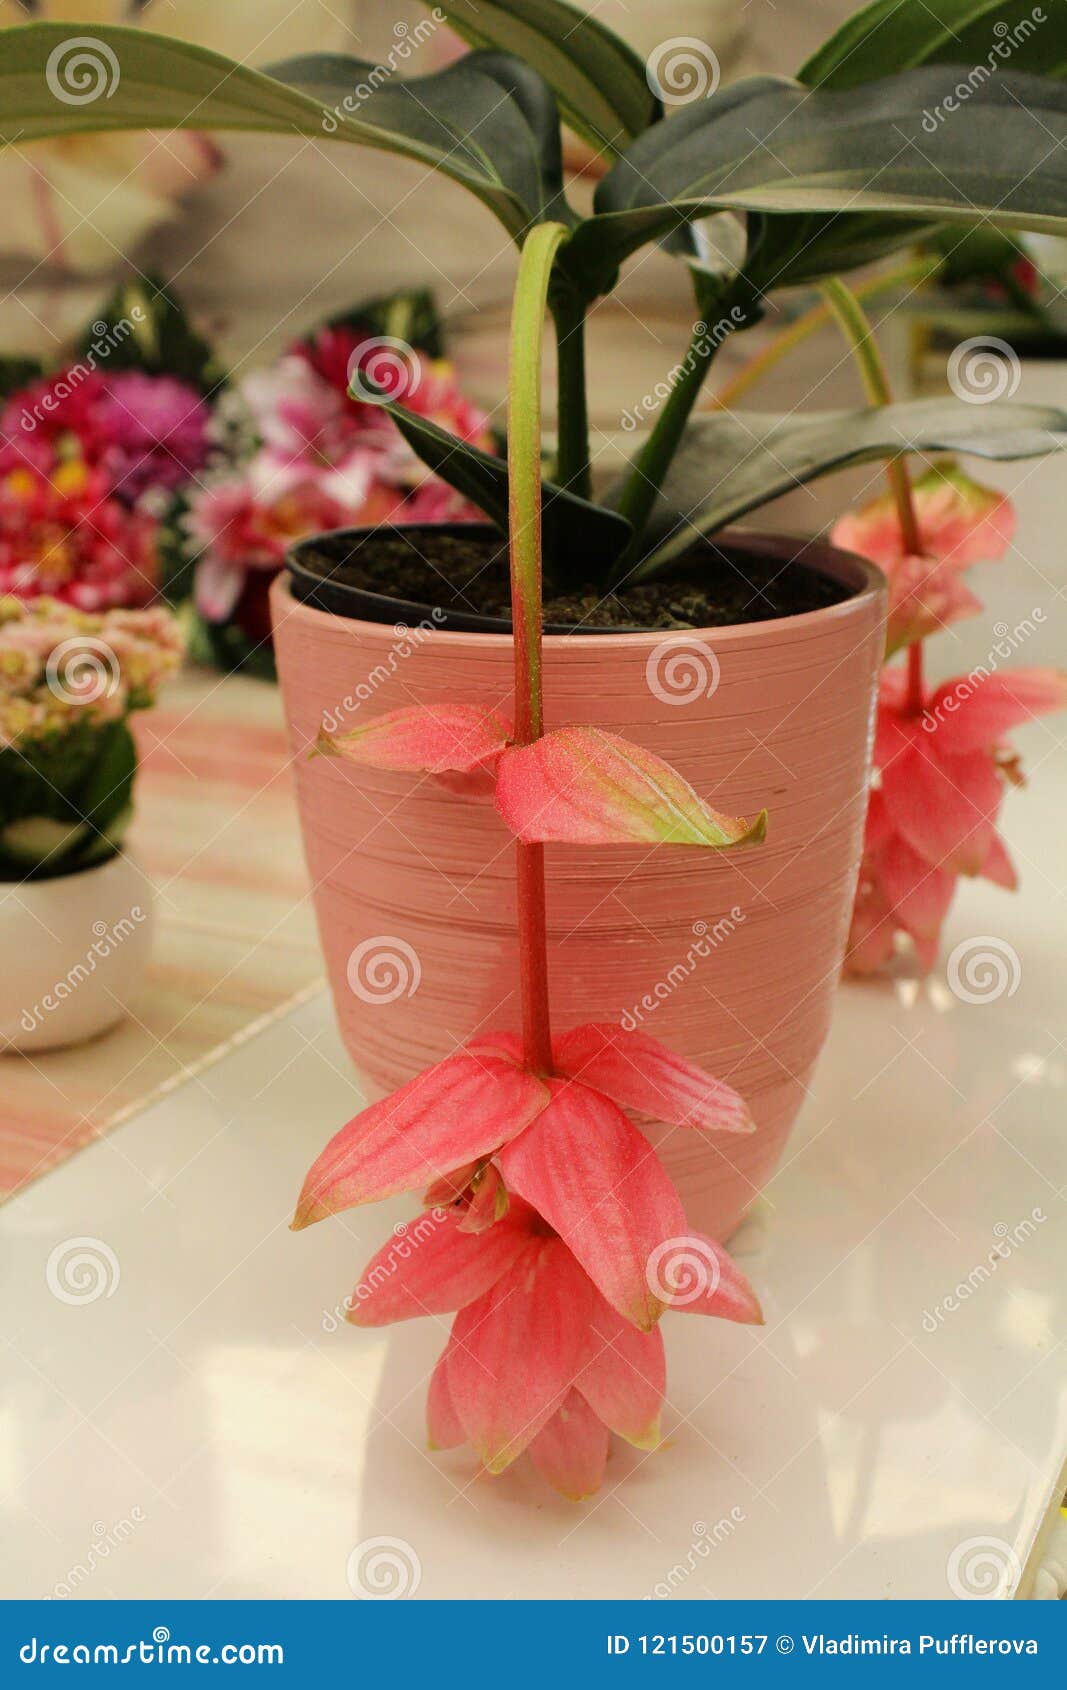 pink flowers of medinila plant